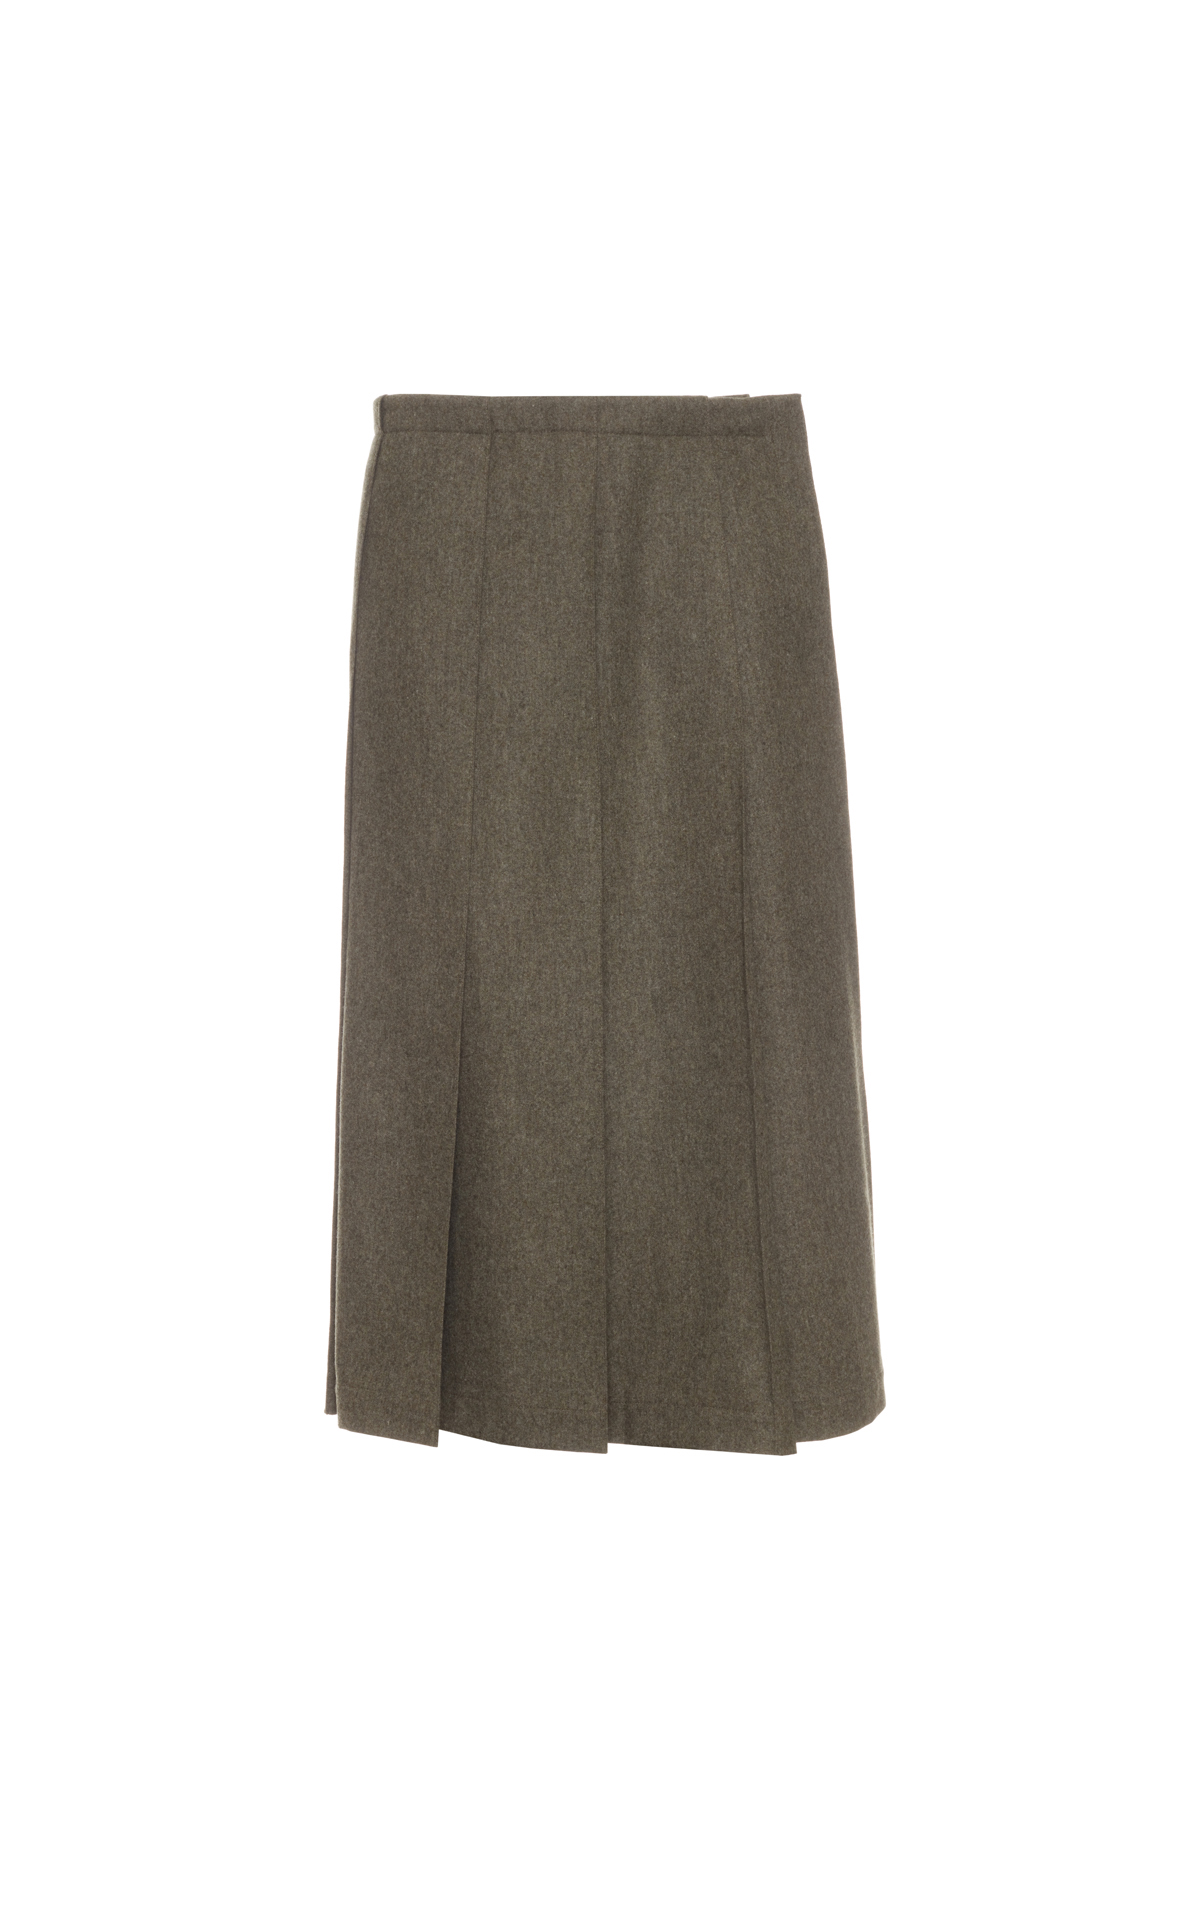 Jil Sander Green skirt from Bicester Village